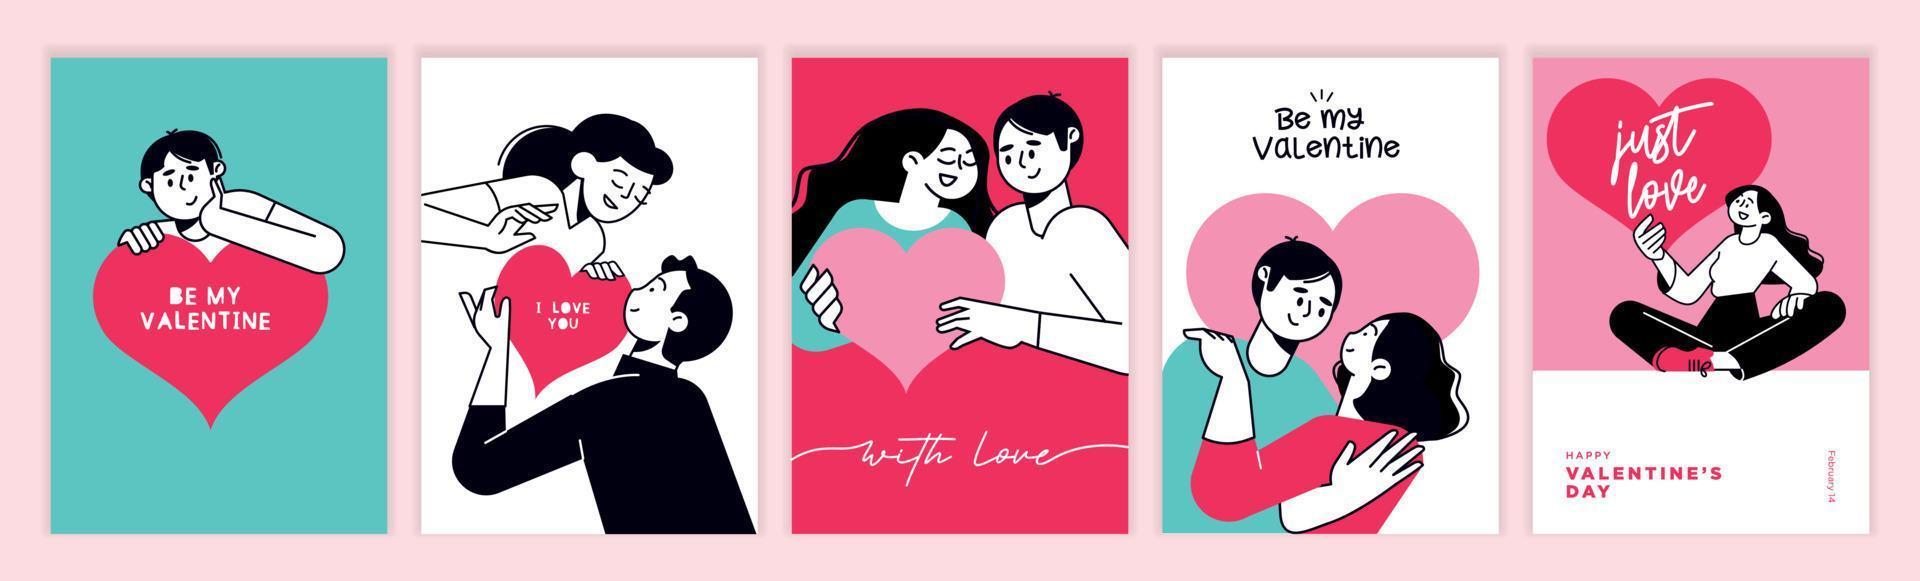 Valentines day. Set of vector illustrations for greeting card, website and mobile website banner, social media banner, marketing material.